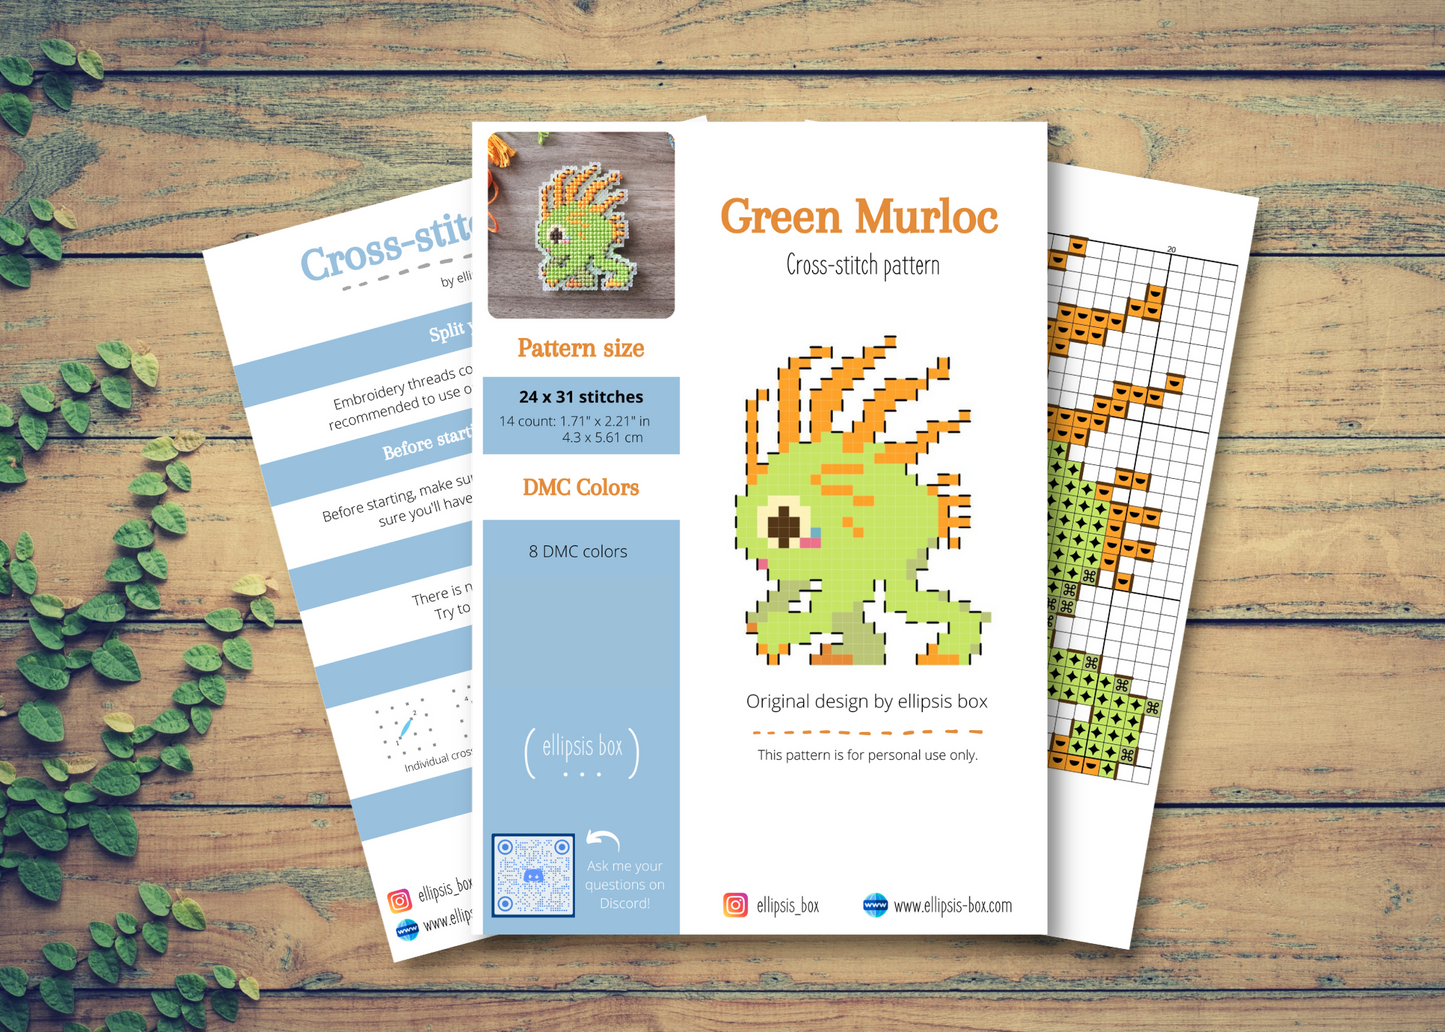 Cross-stitch pattern - Green Murloc from World of Warcraft